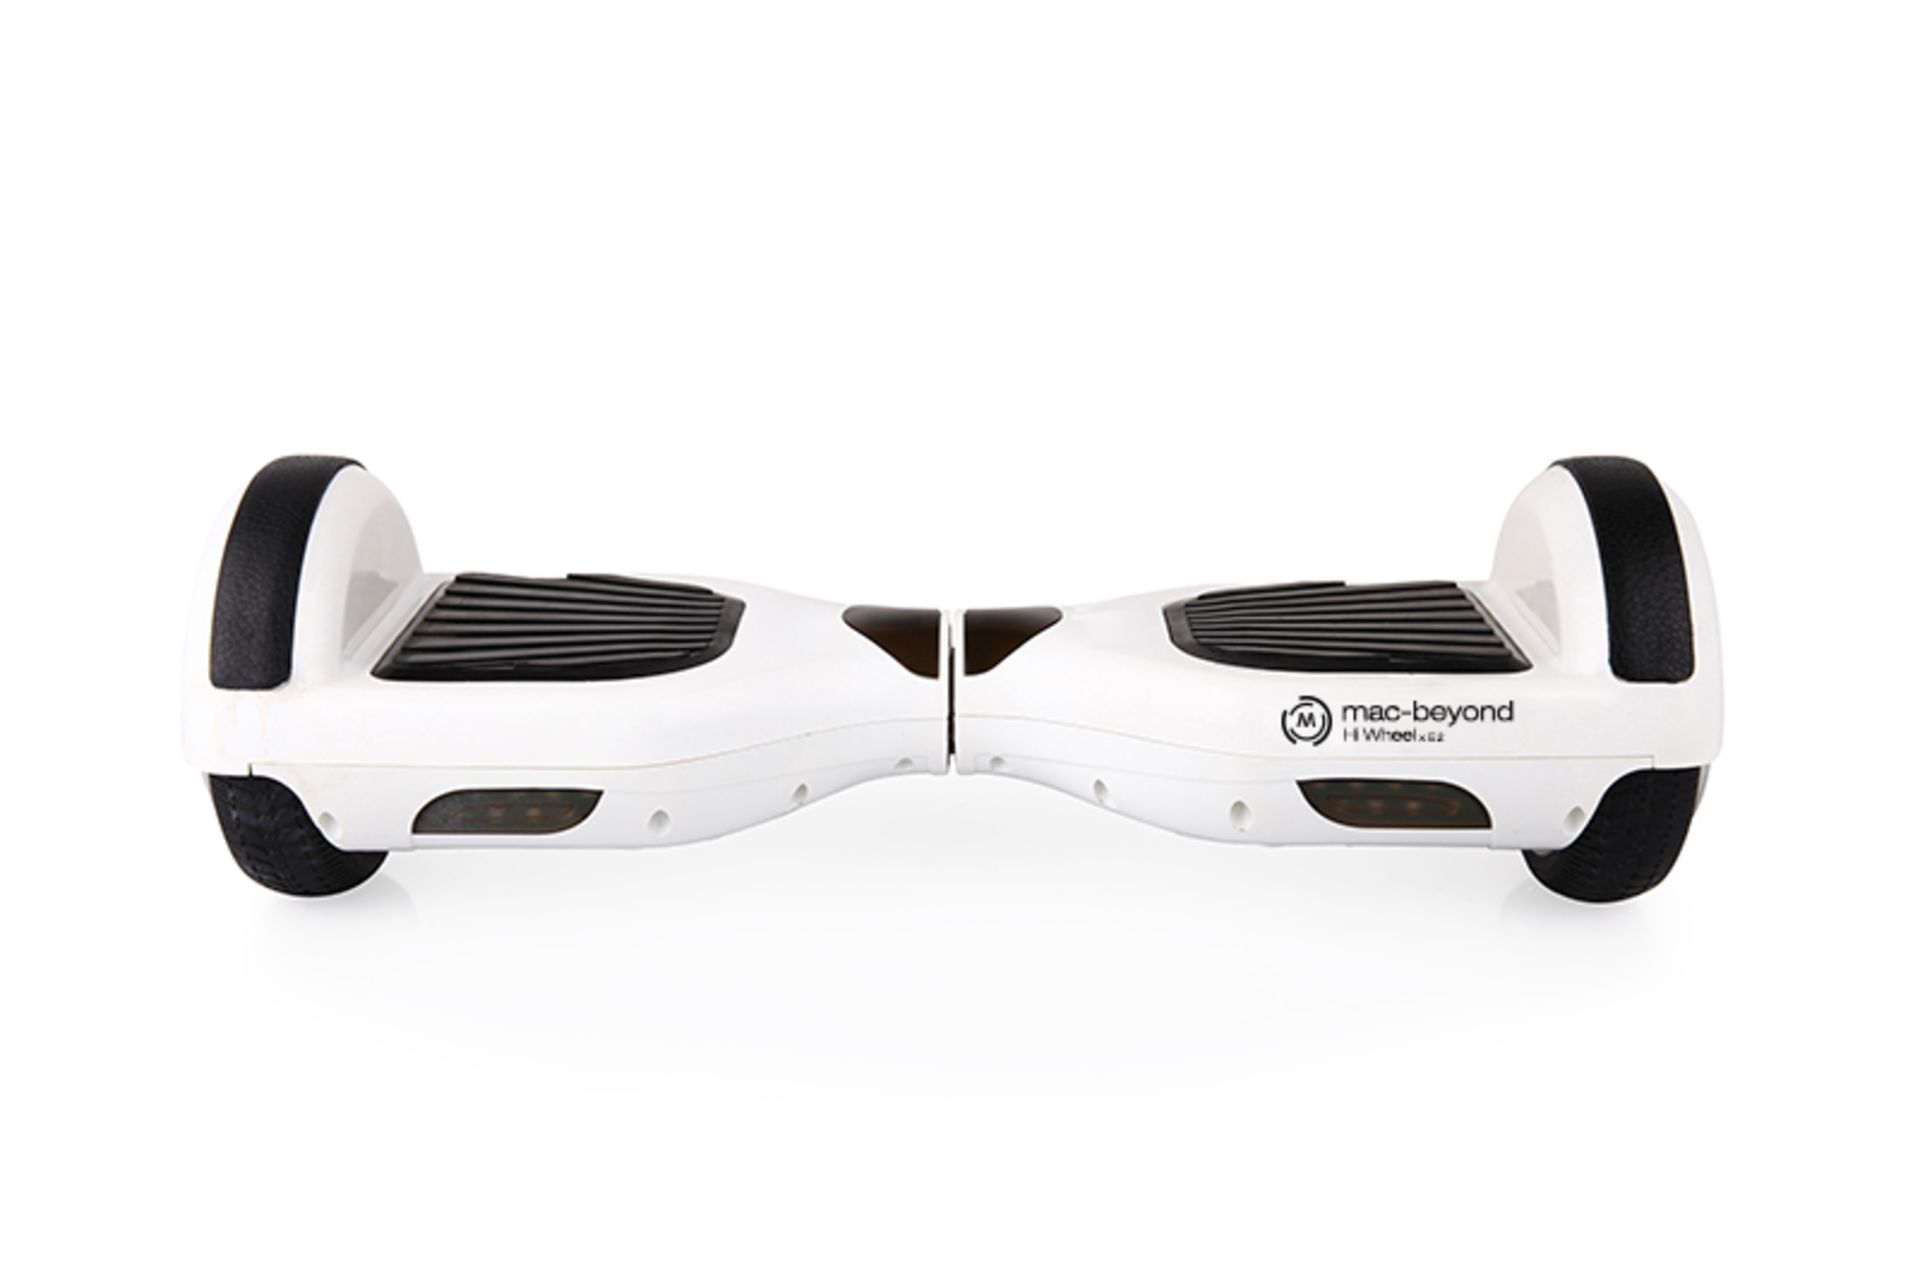 macbeyond x Hi wheel Series, White Model R2 LED (6.5 inch wheels, Best Seller) Smart personal - Image 3 of 8